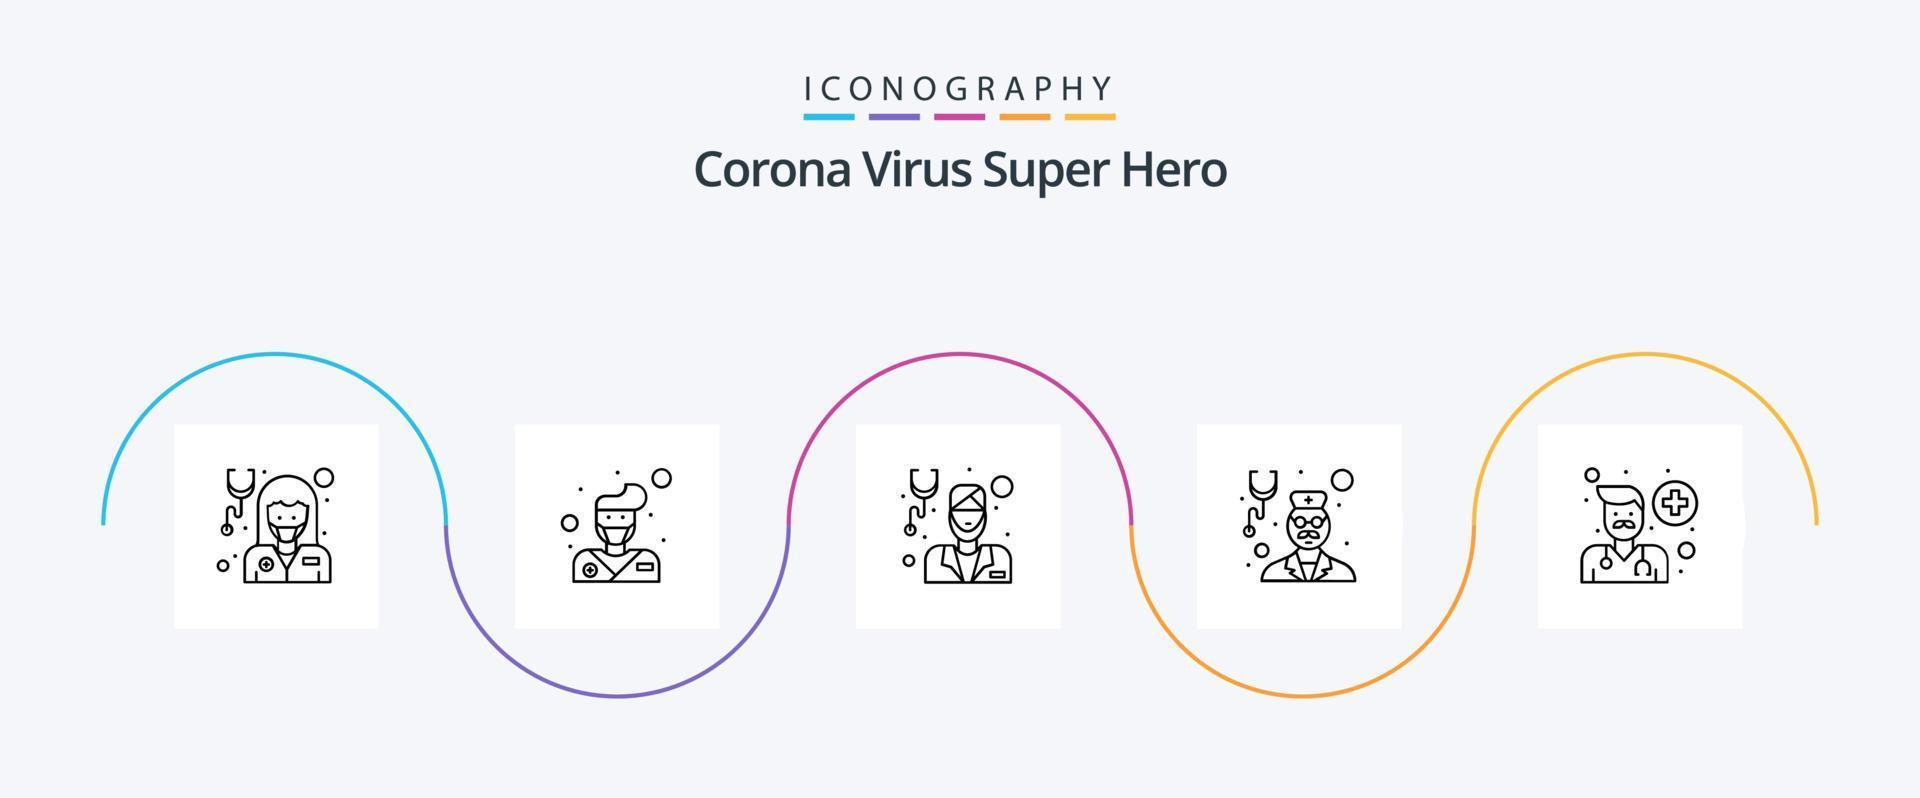 corona vírus super herói linha 5 ícone pacote Incluindo avatar. médico. barba. doutor. médico vetor